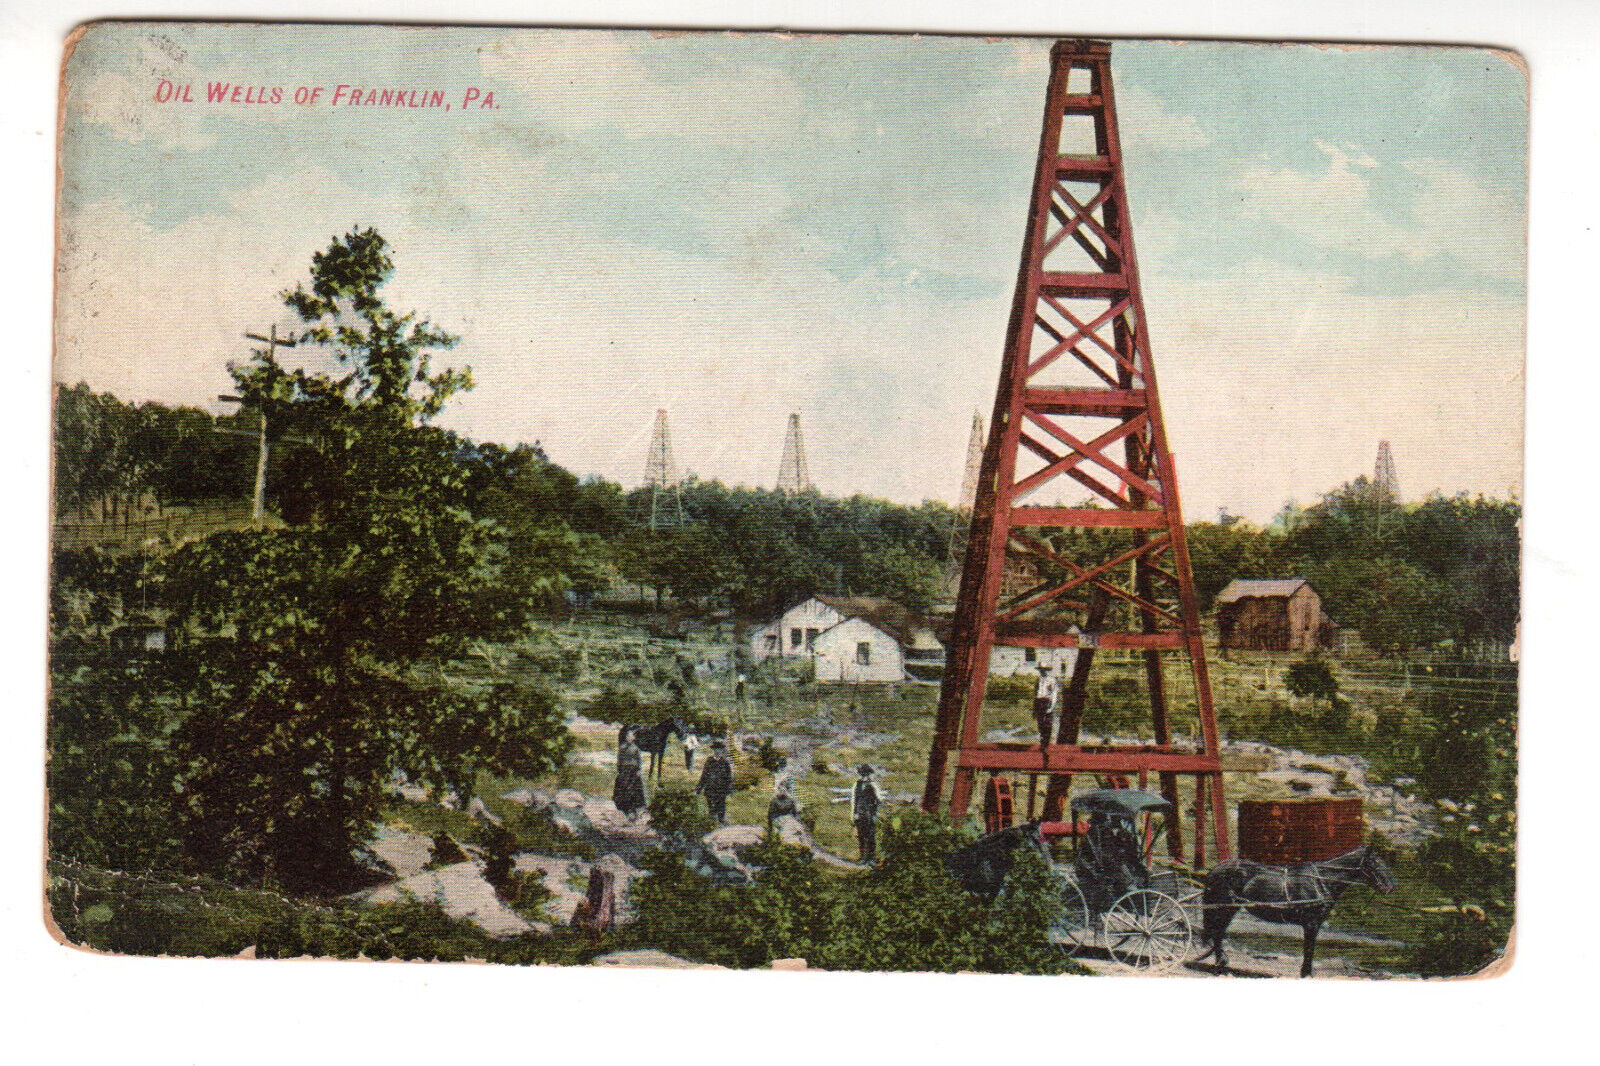 Postcard: Franklin, PA (Pennsylvania) - oil wells, postmark 1909